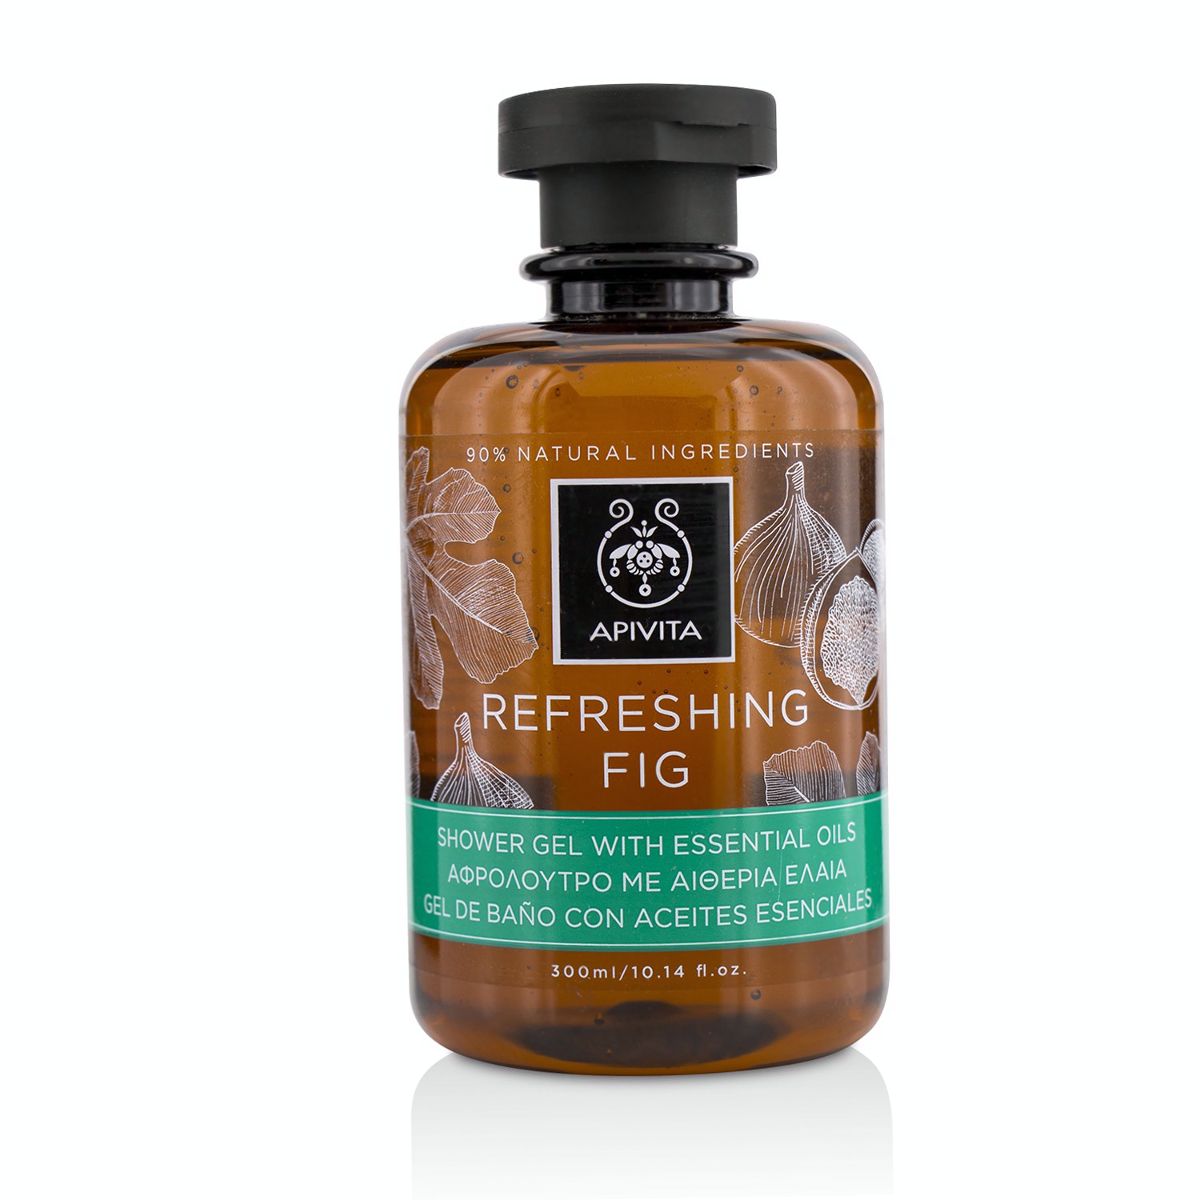 Refreshing Fig Shower Gel with Essential Oils Apivita Image